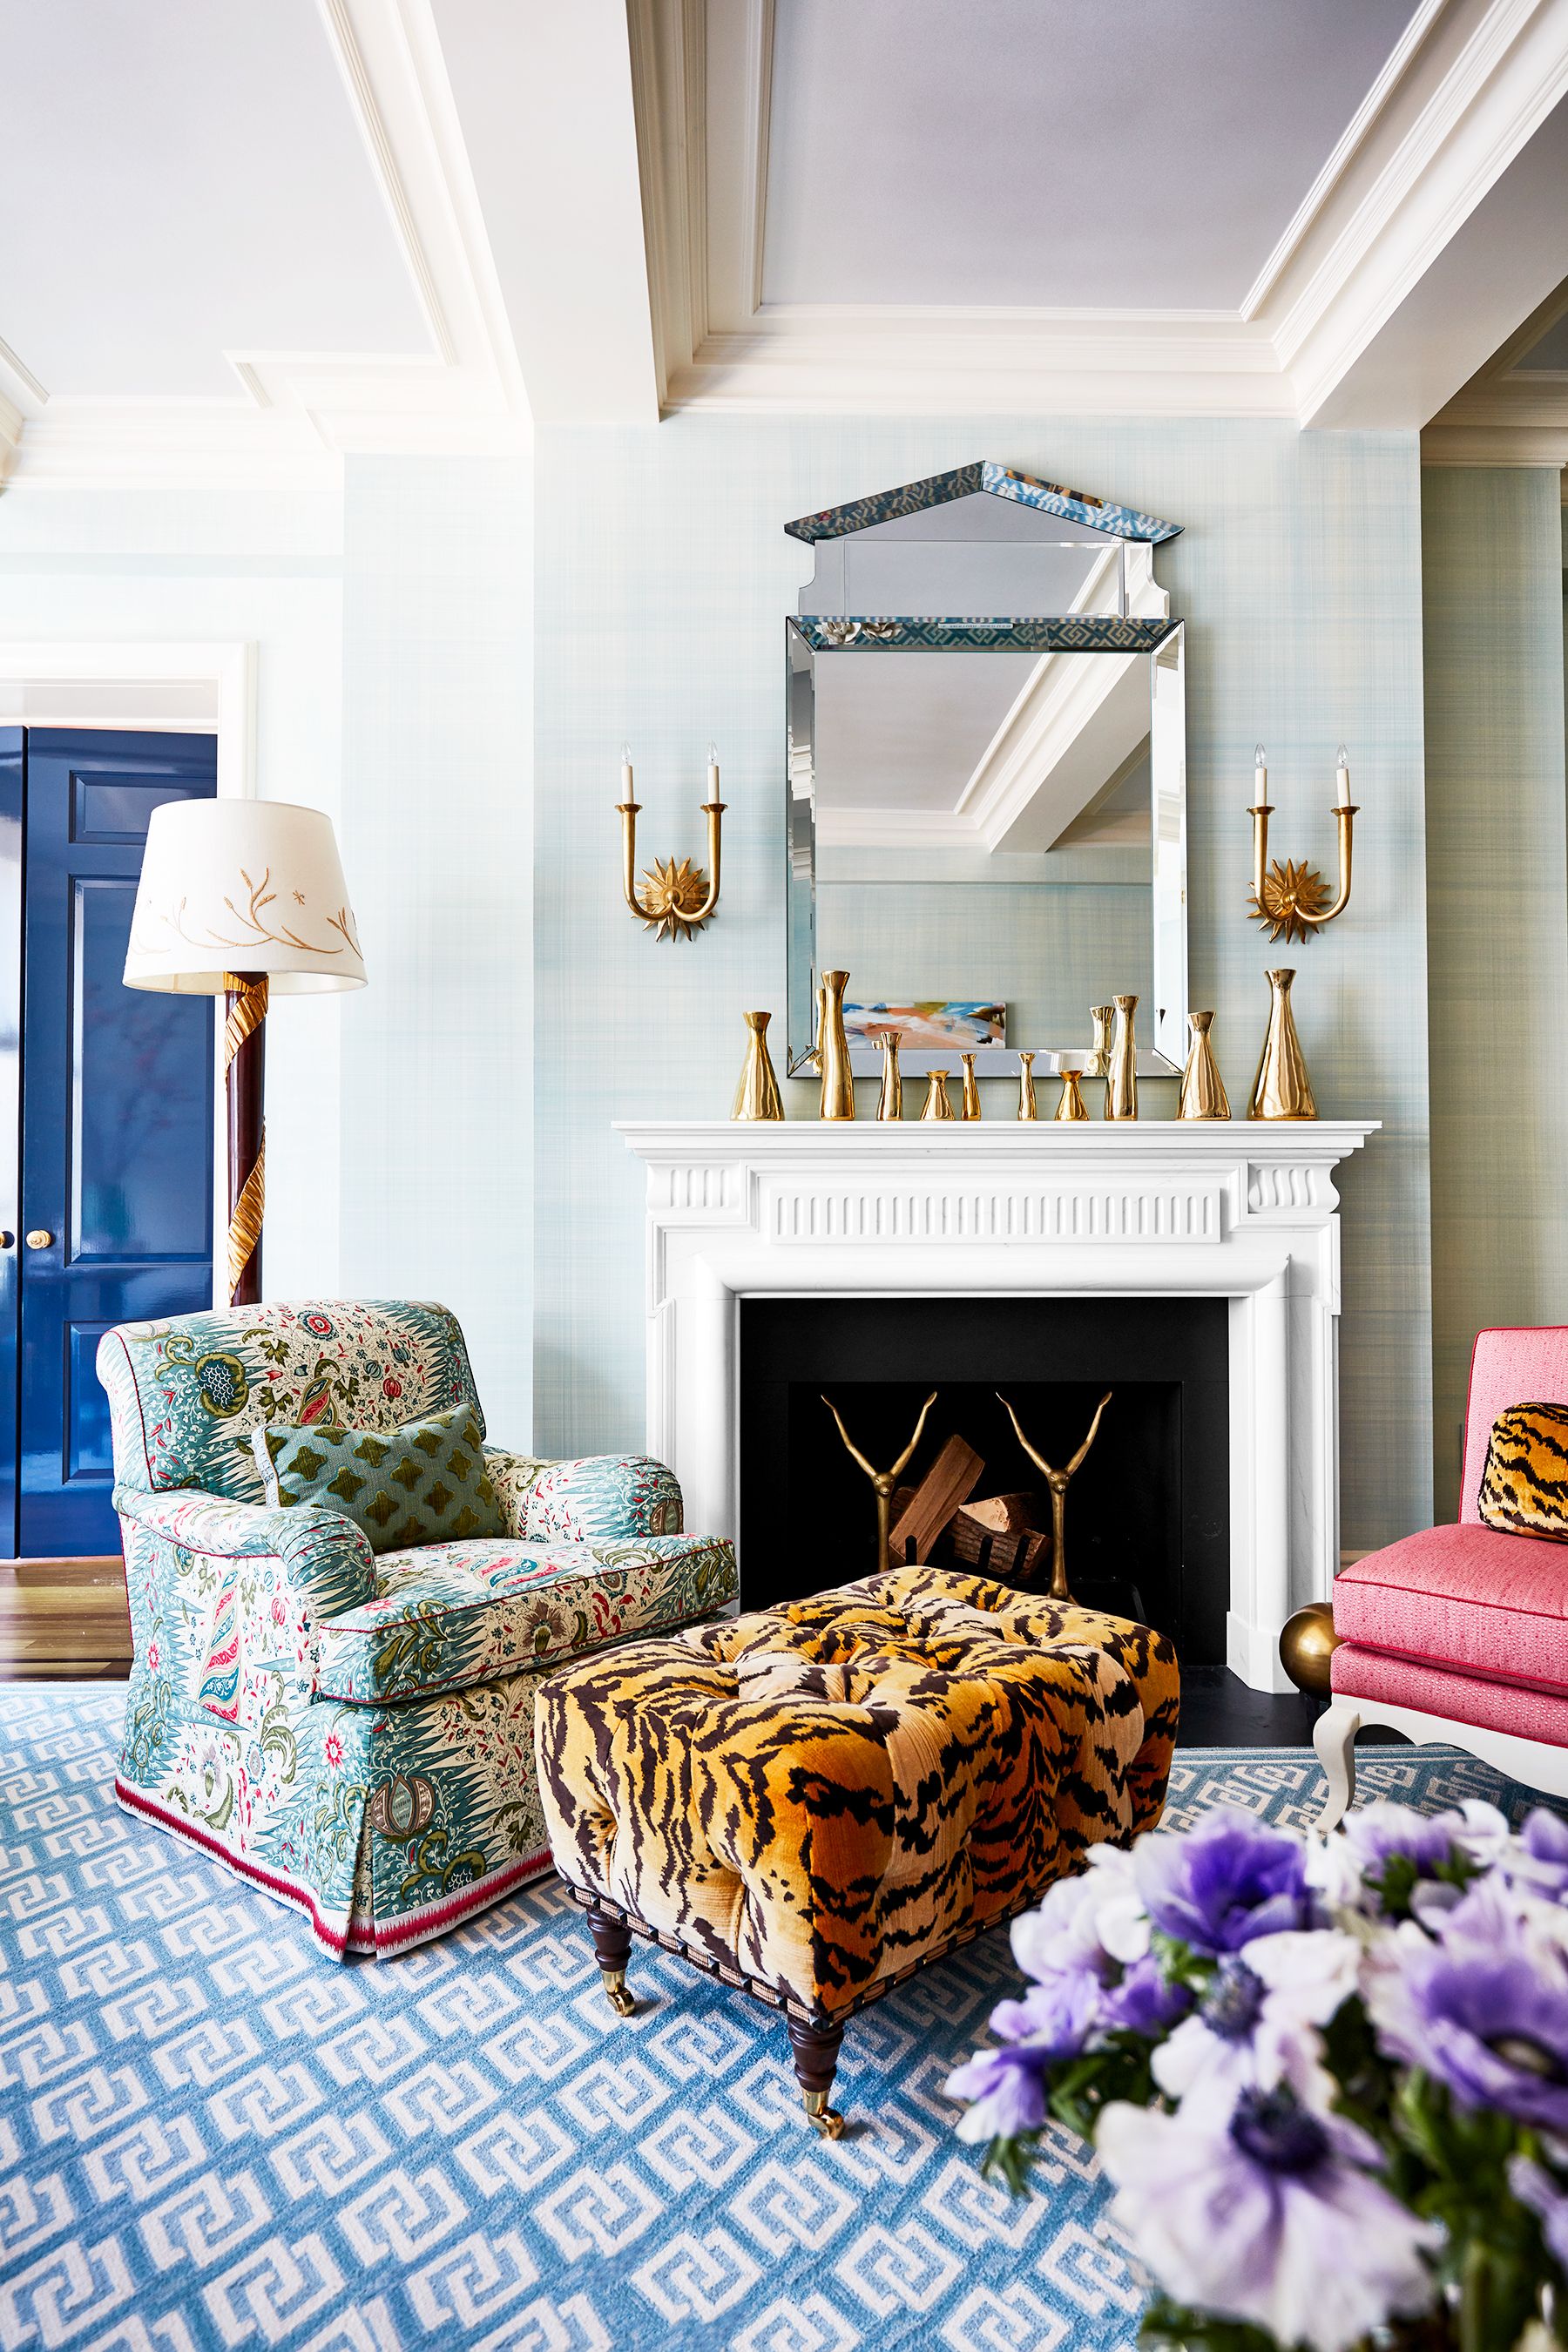 20 Best Fireplace Ideas   Stylish Indoor Fireplace Designs, Decor ...